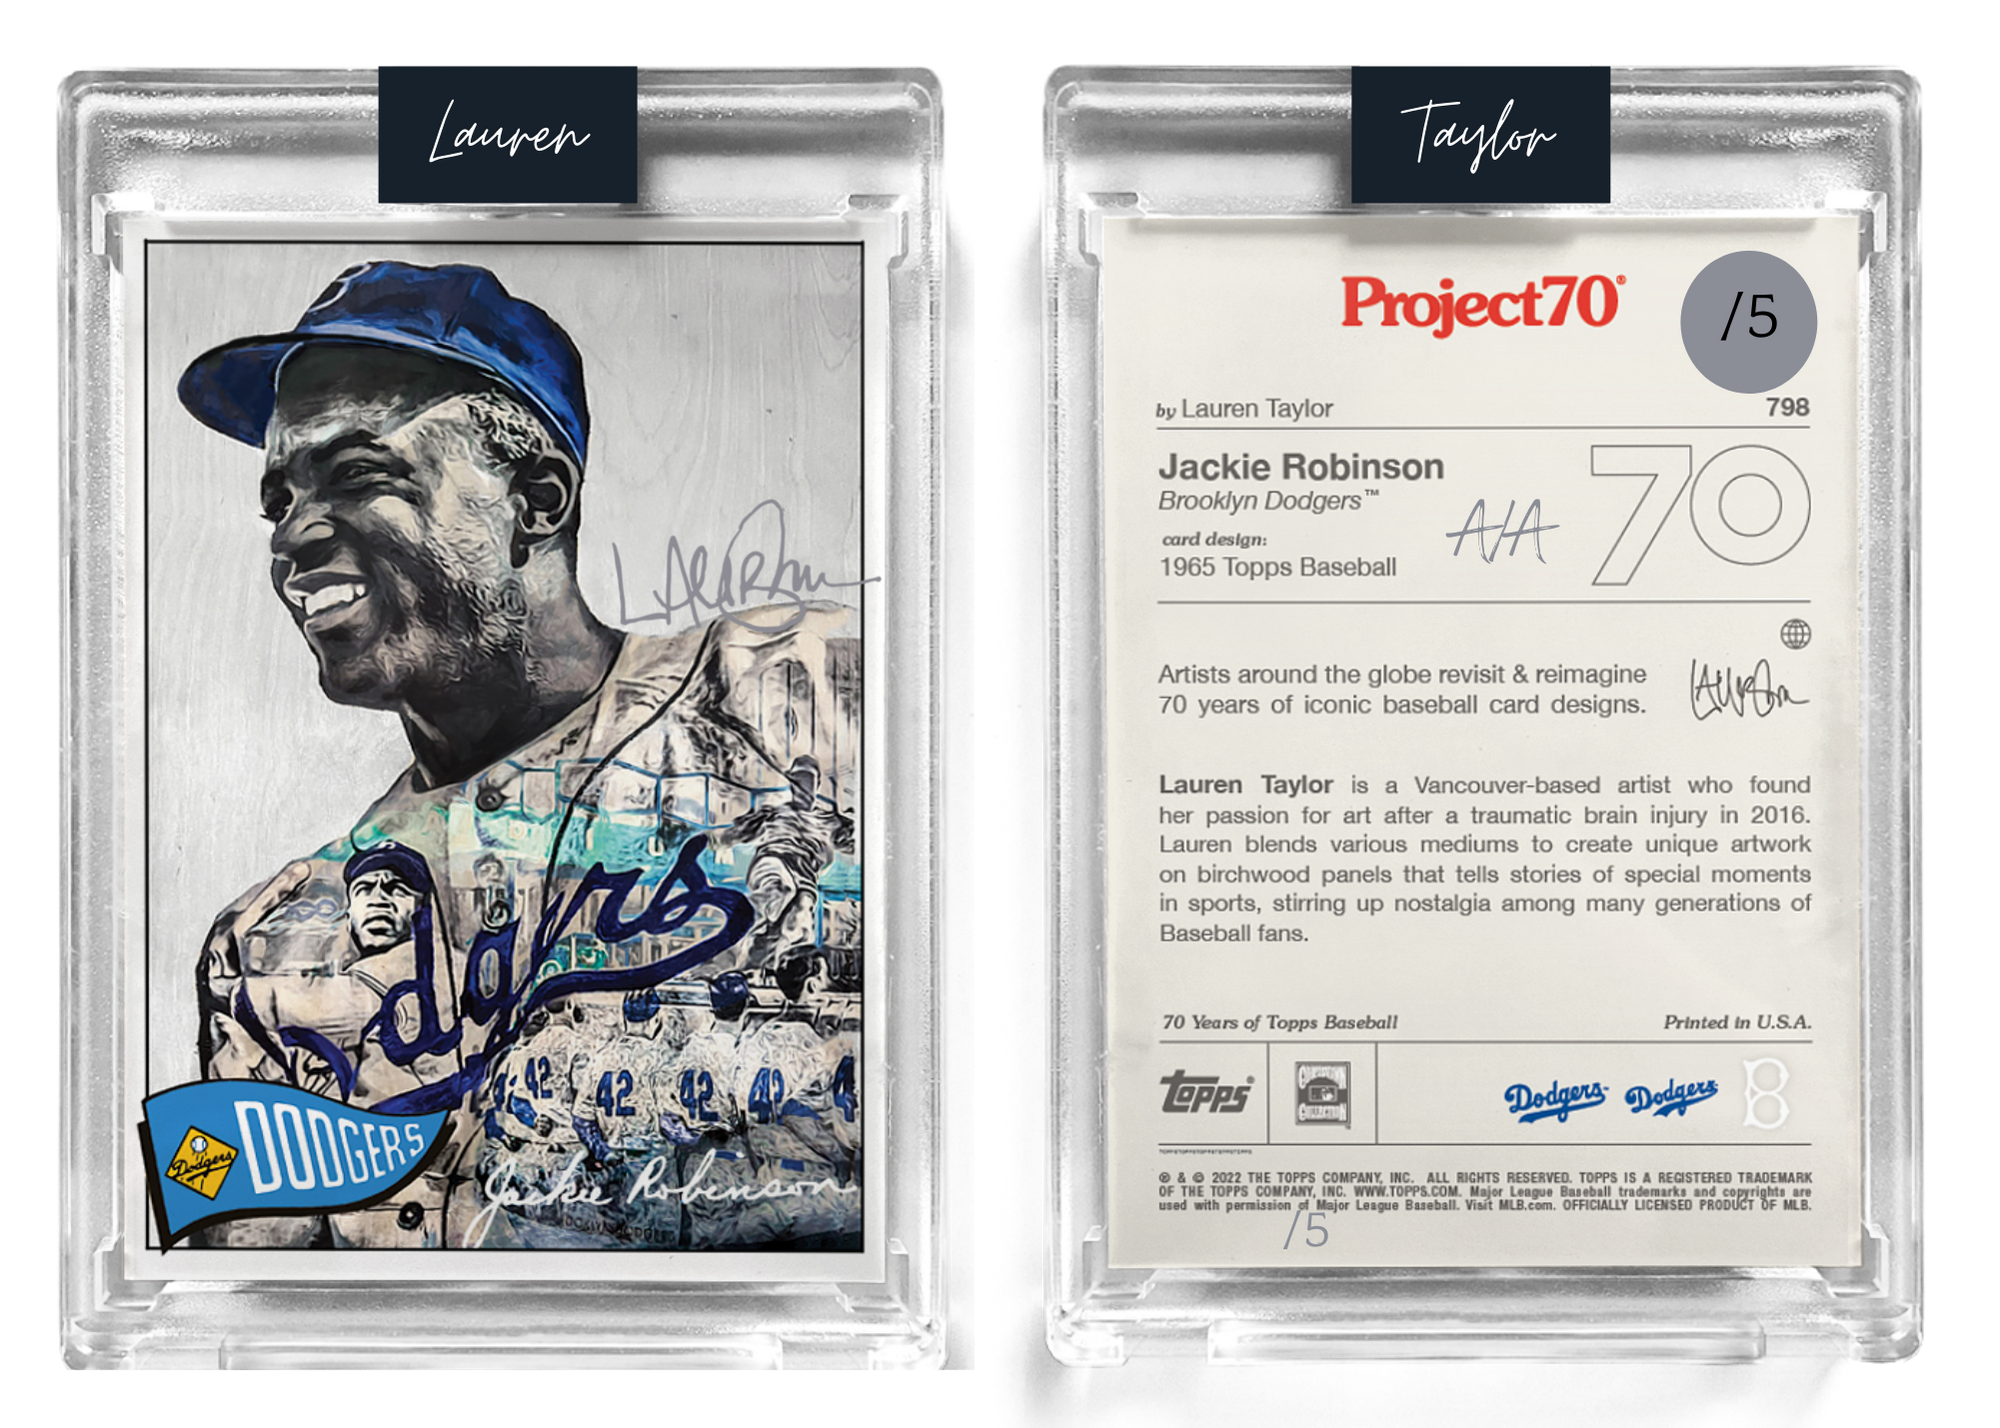 /5 Silver Artist Signature - Jackie Robinson - 130pt Card #798 by Lauren Taylor - Baseball Card